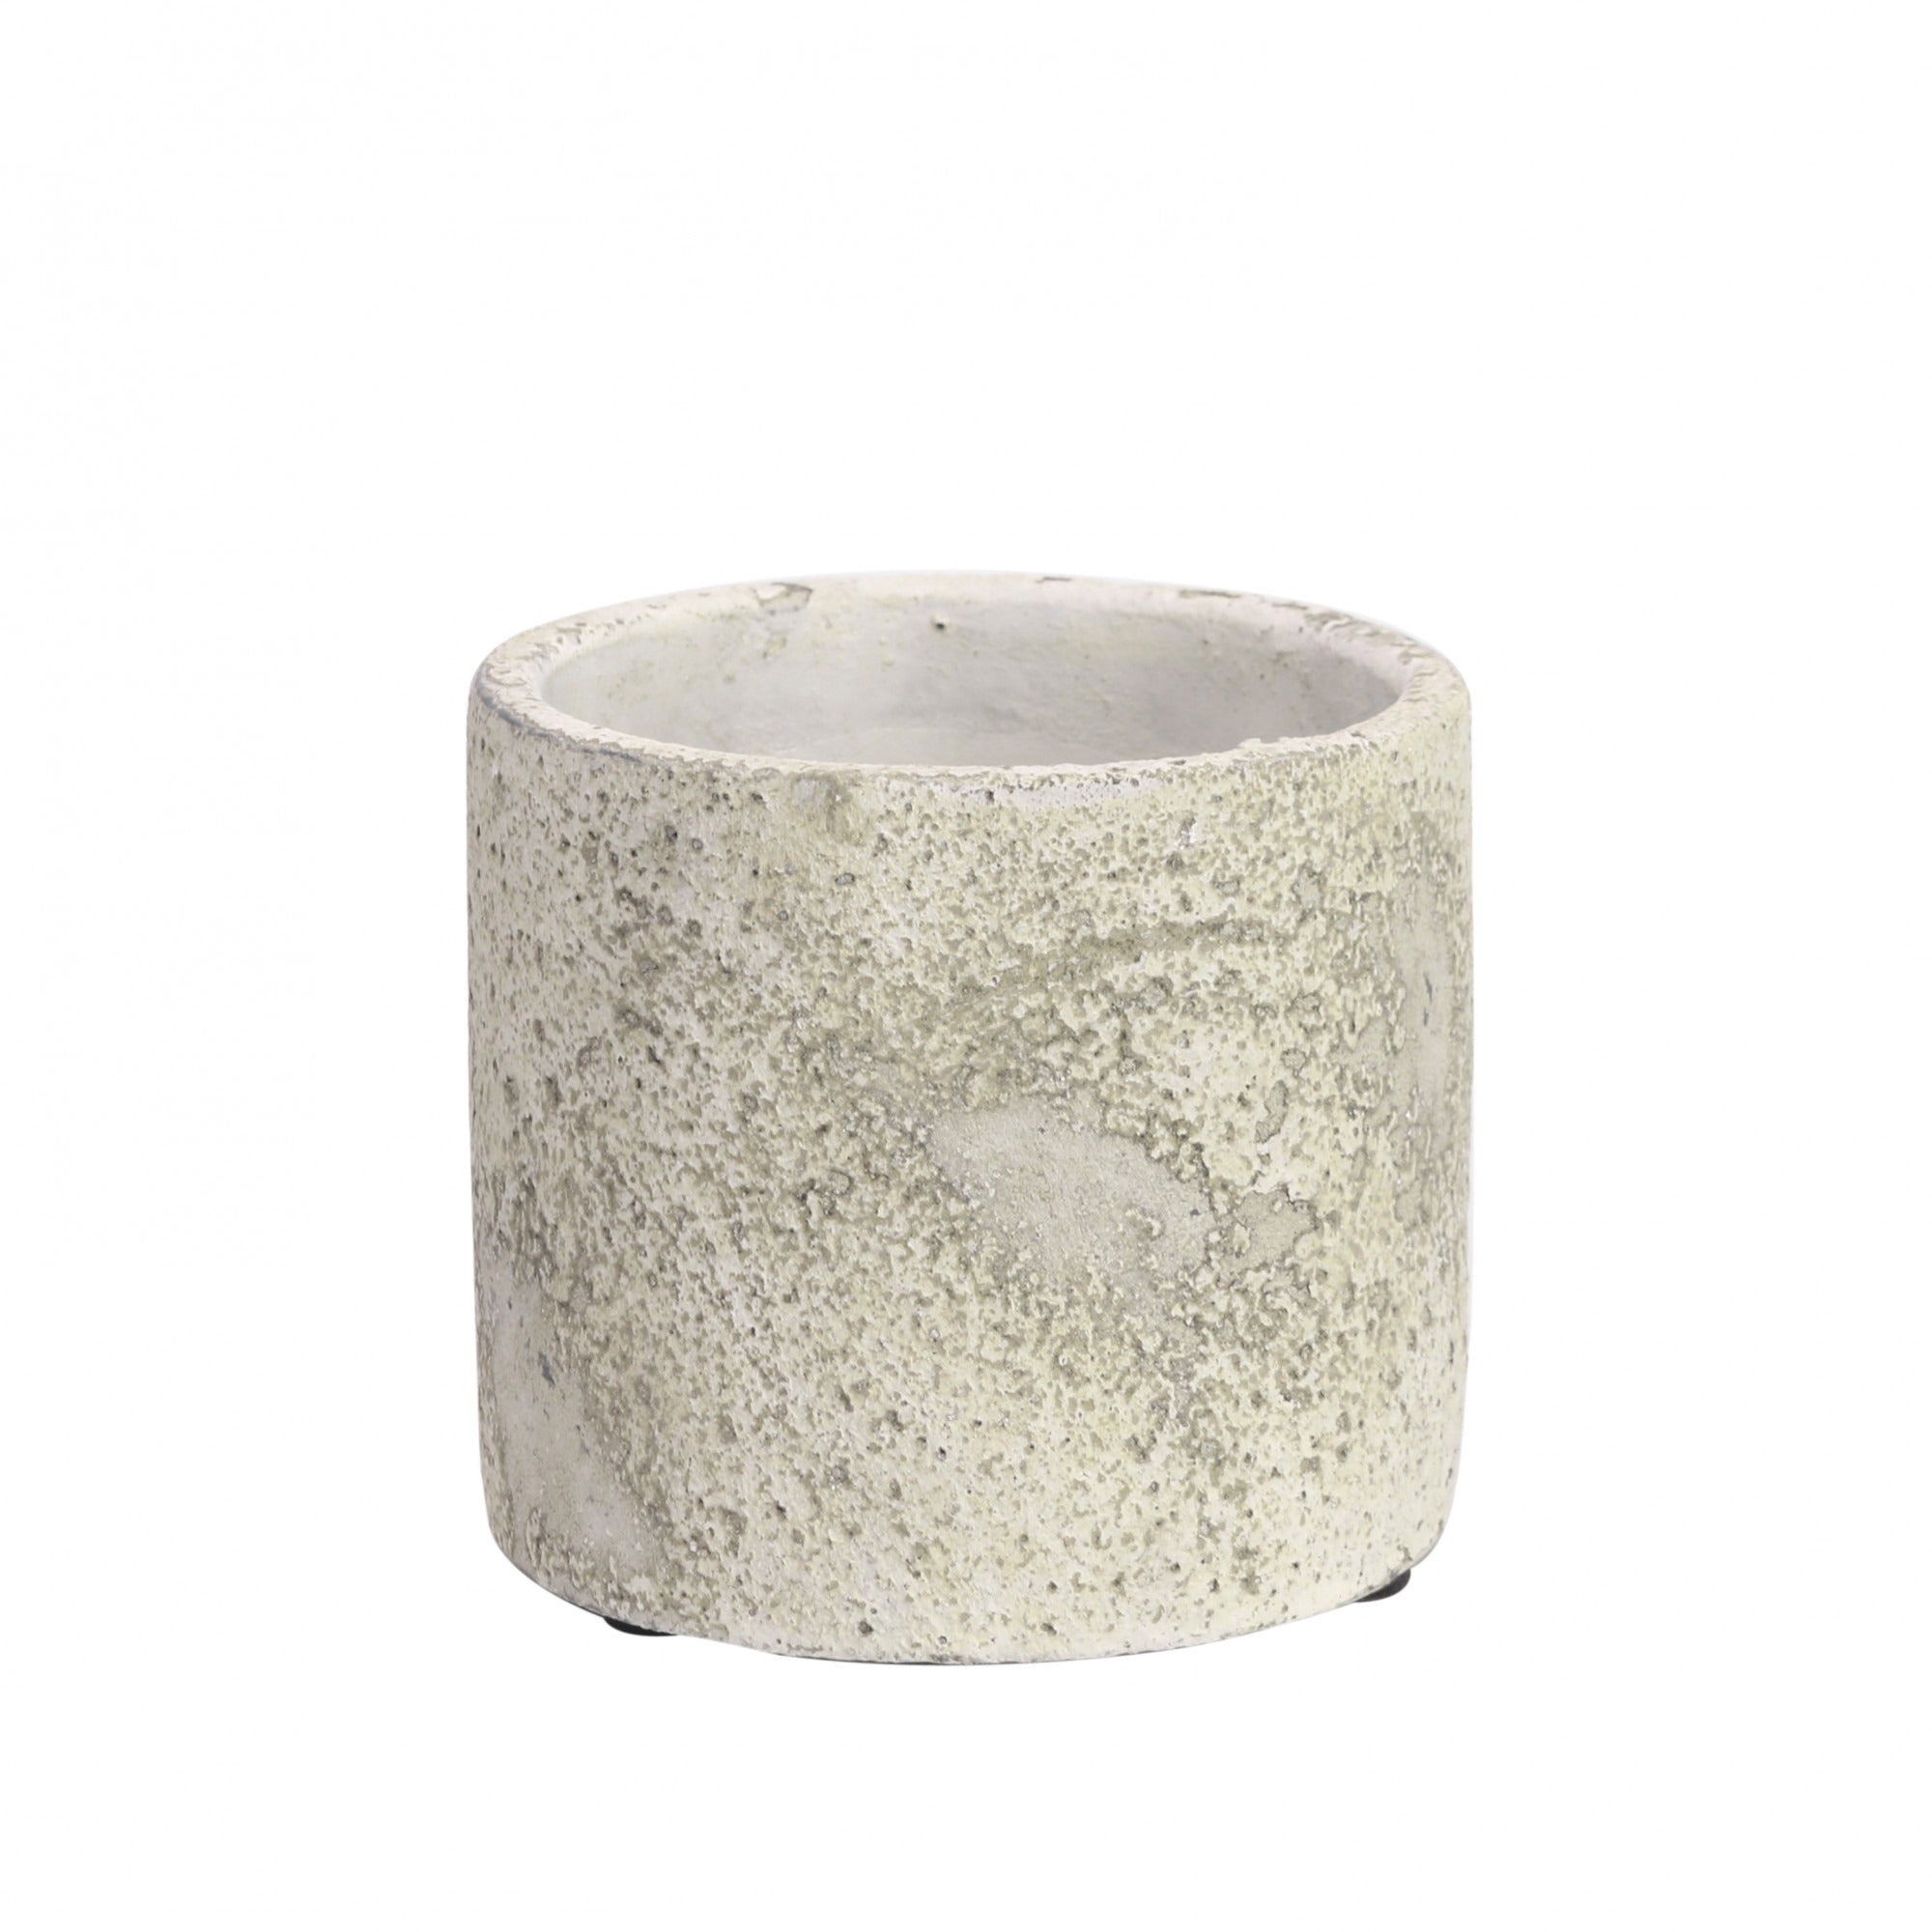 View Rustic Round Cement Flower Pot 10cm information